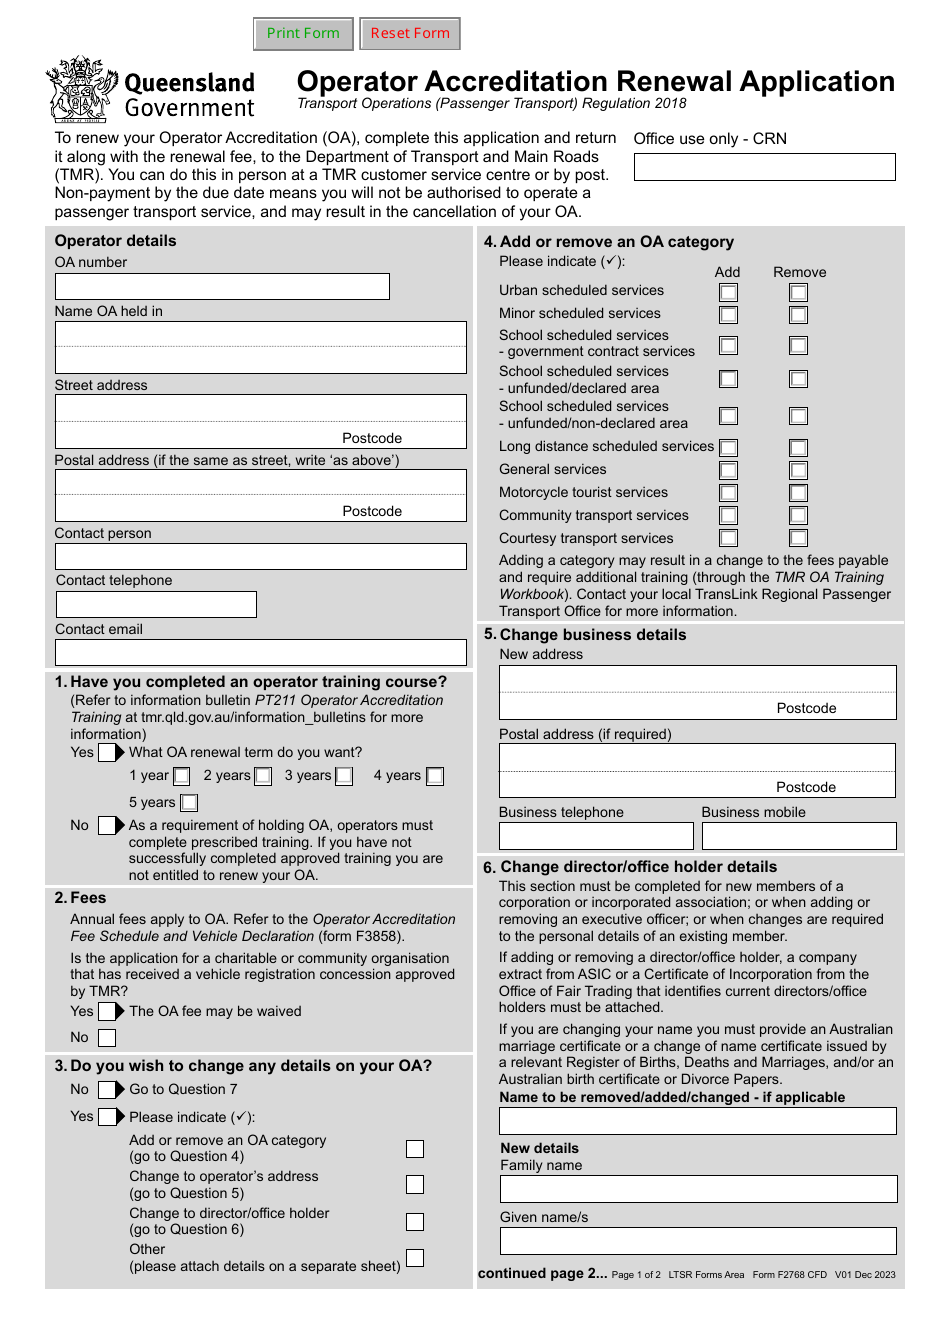 Form F2768 Operator Accreditation Renewal Application - Queensland, Australia, Page 1